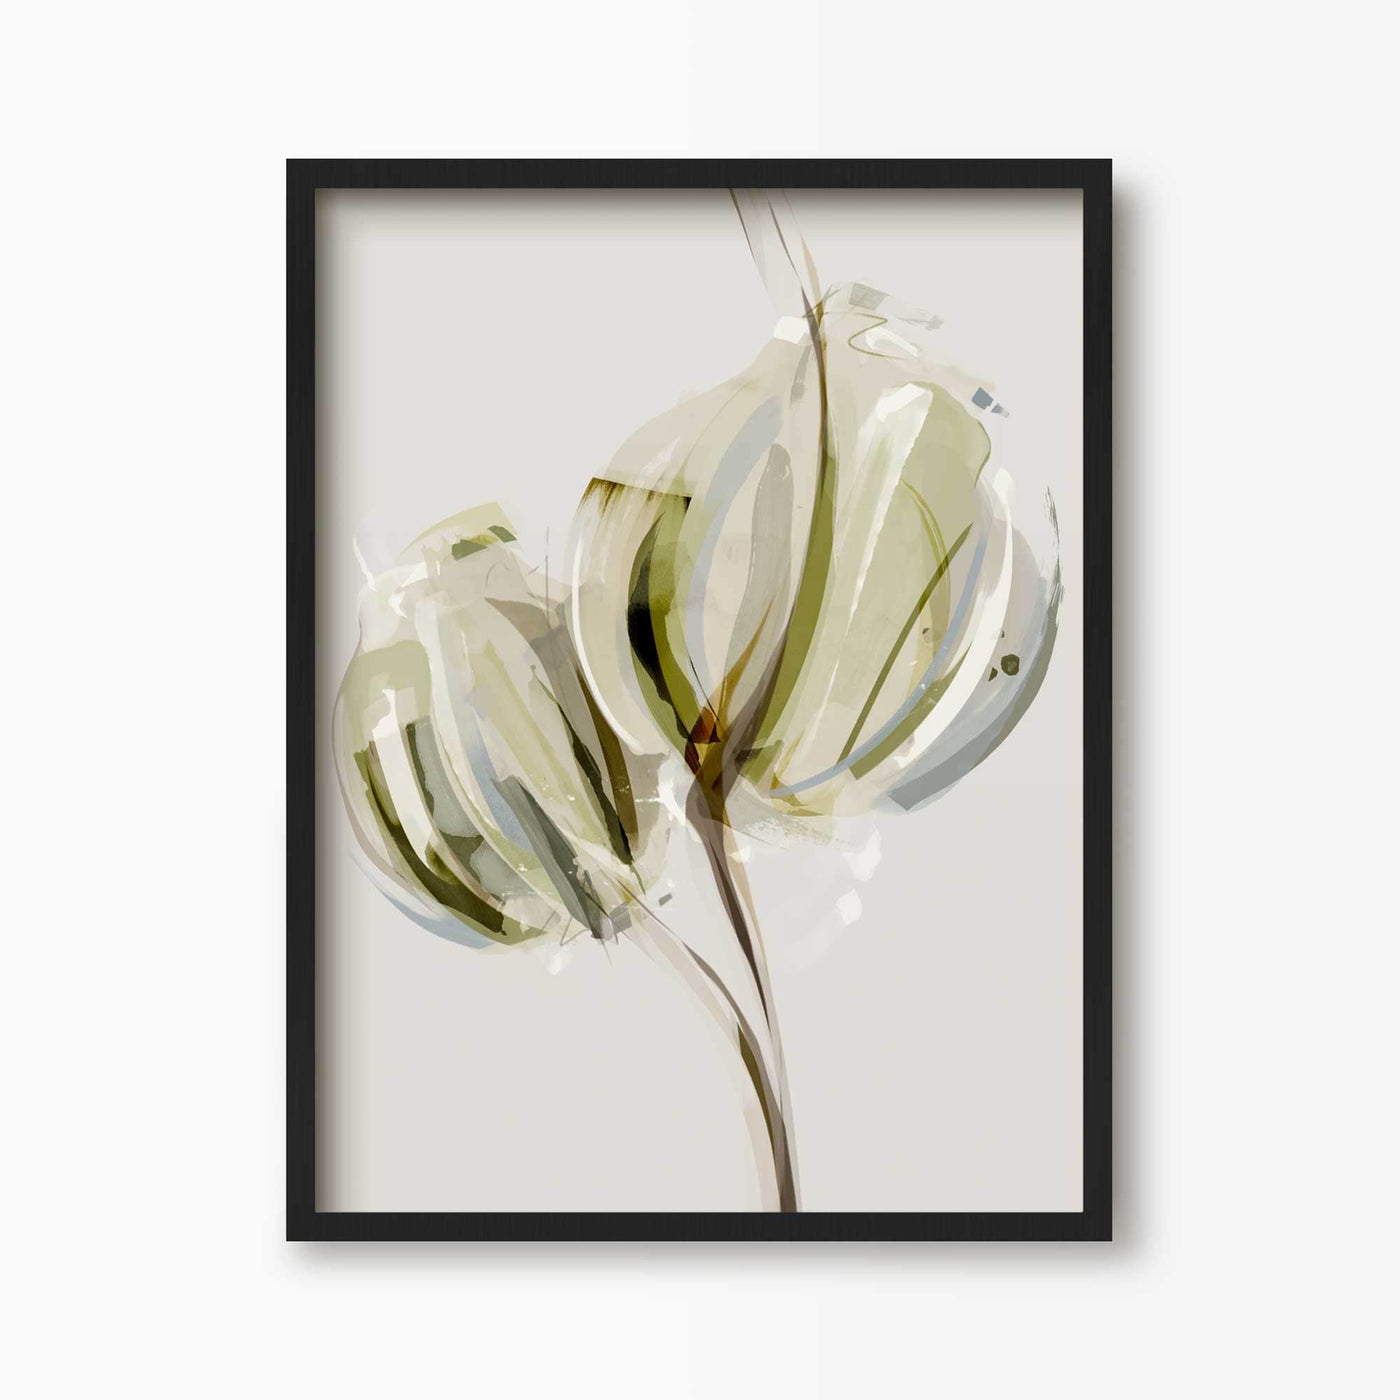 Green Lili 30x40cm (12x16") / Black Frame Best Buds Abstract Floral Art Print